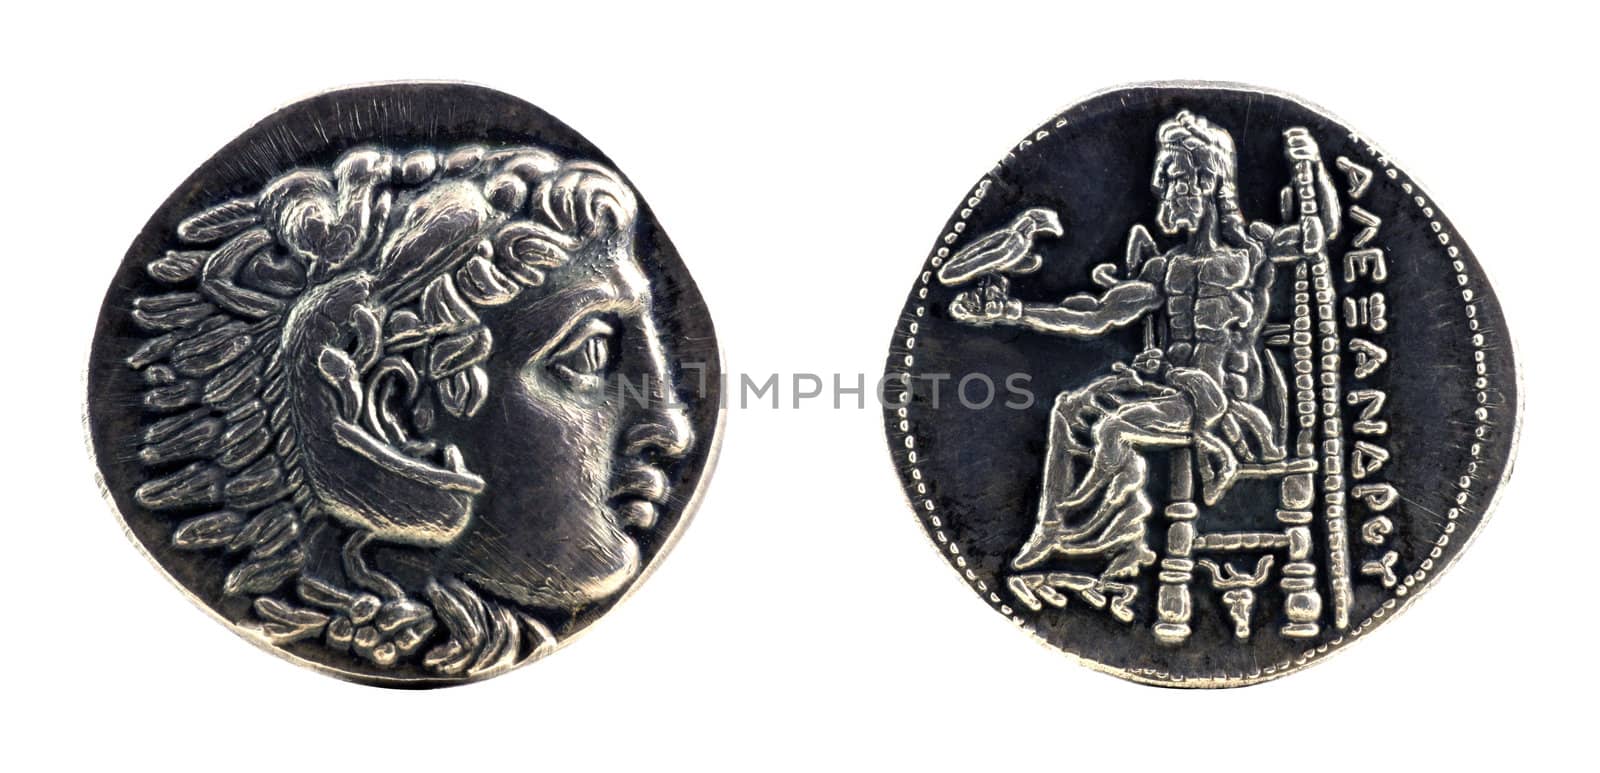 Greek silver tetradrachm from Alexander the Great by Georgios